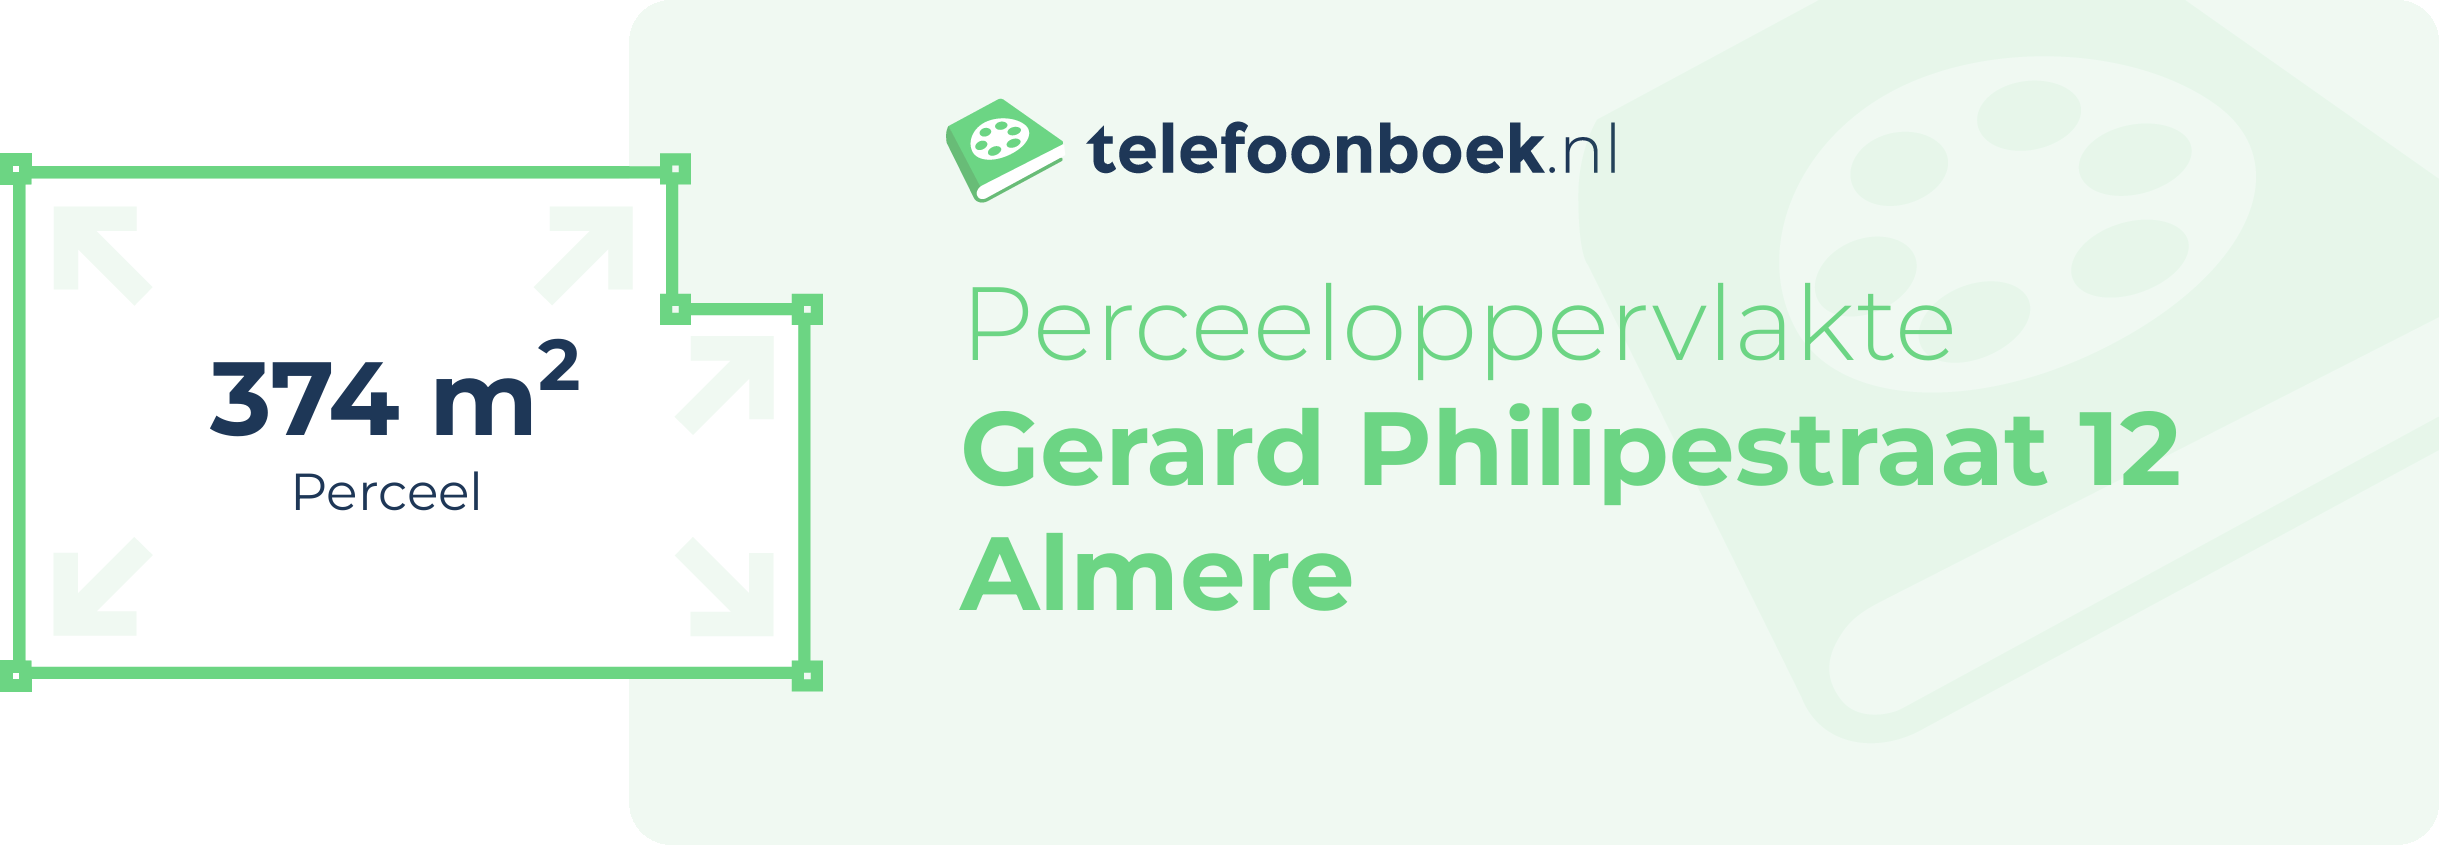 Perceeloppervlakte Gerard Philipestraat 12 Almere